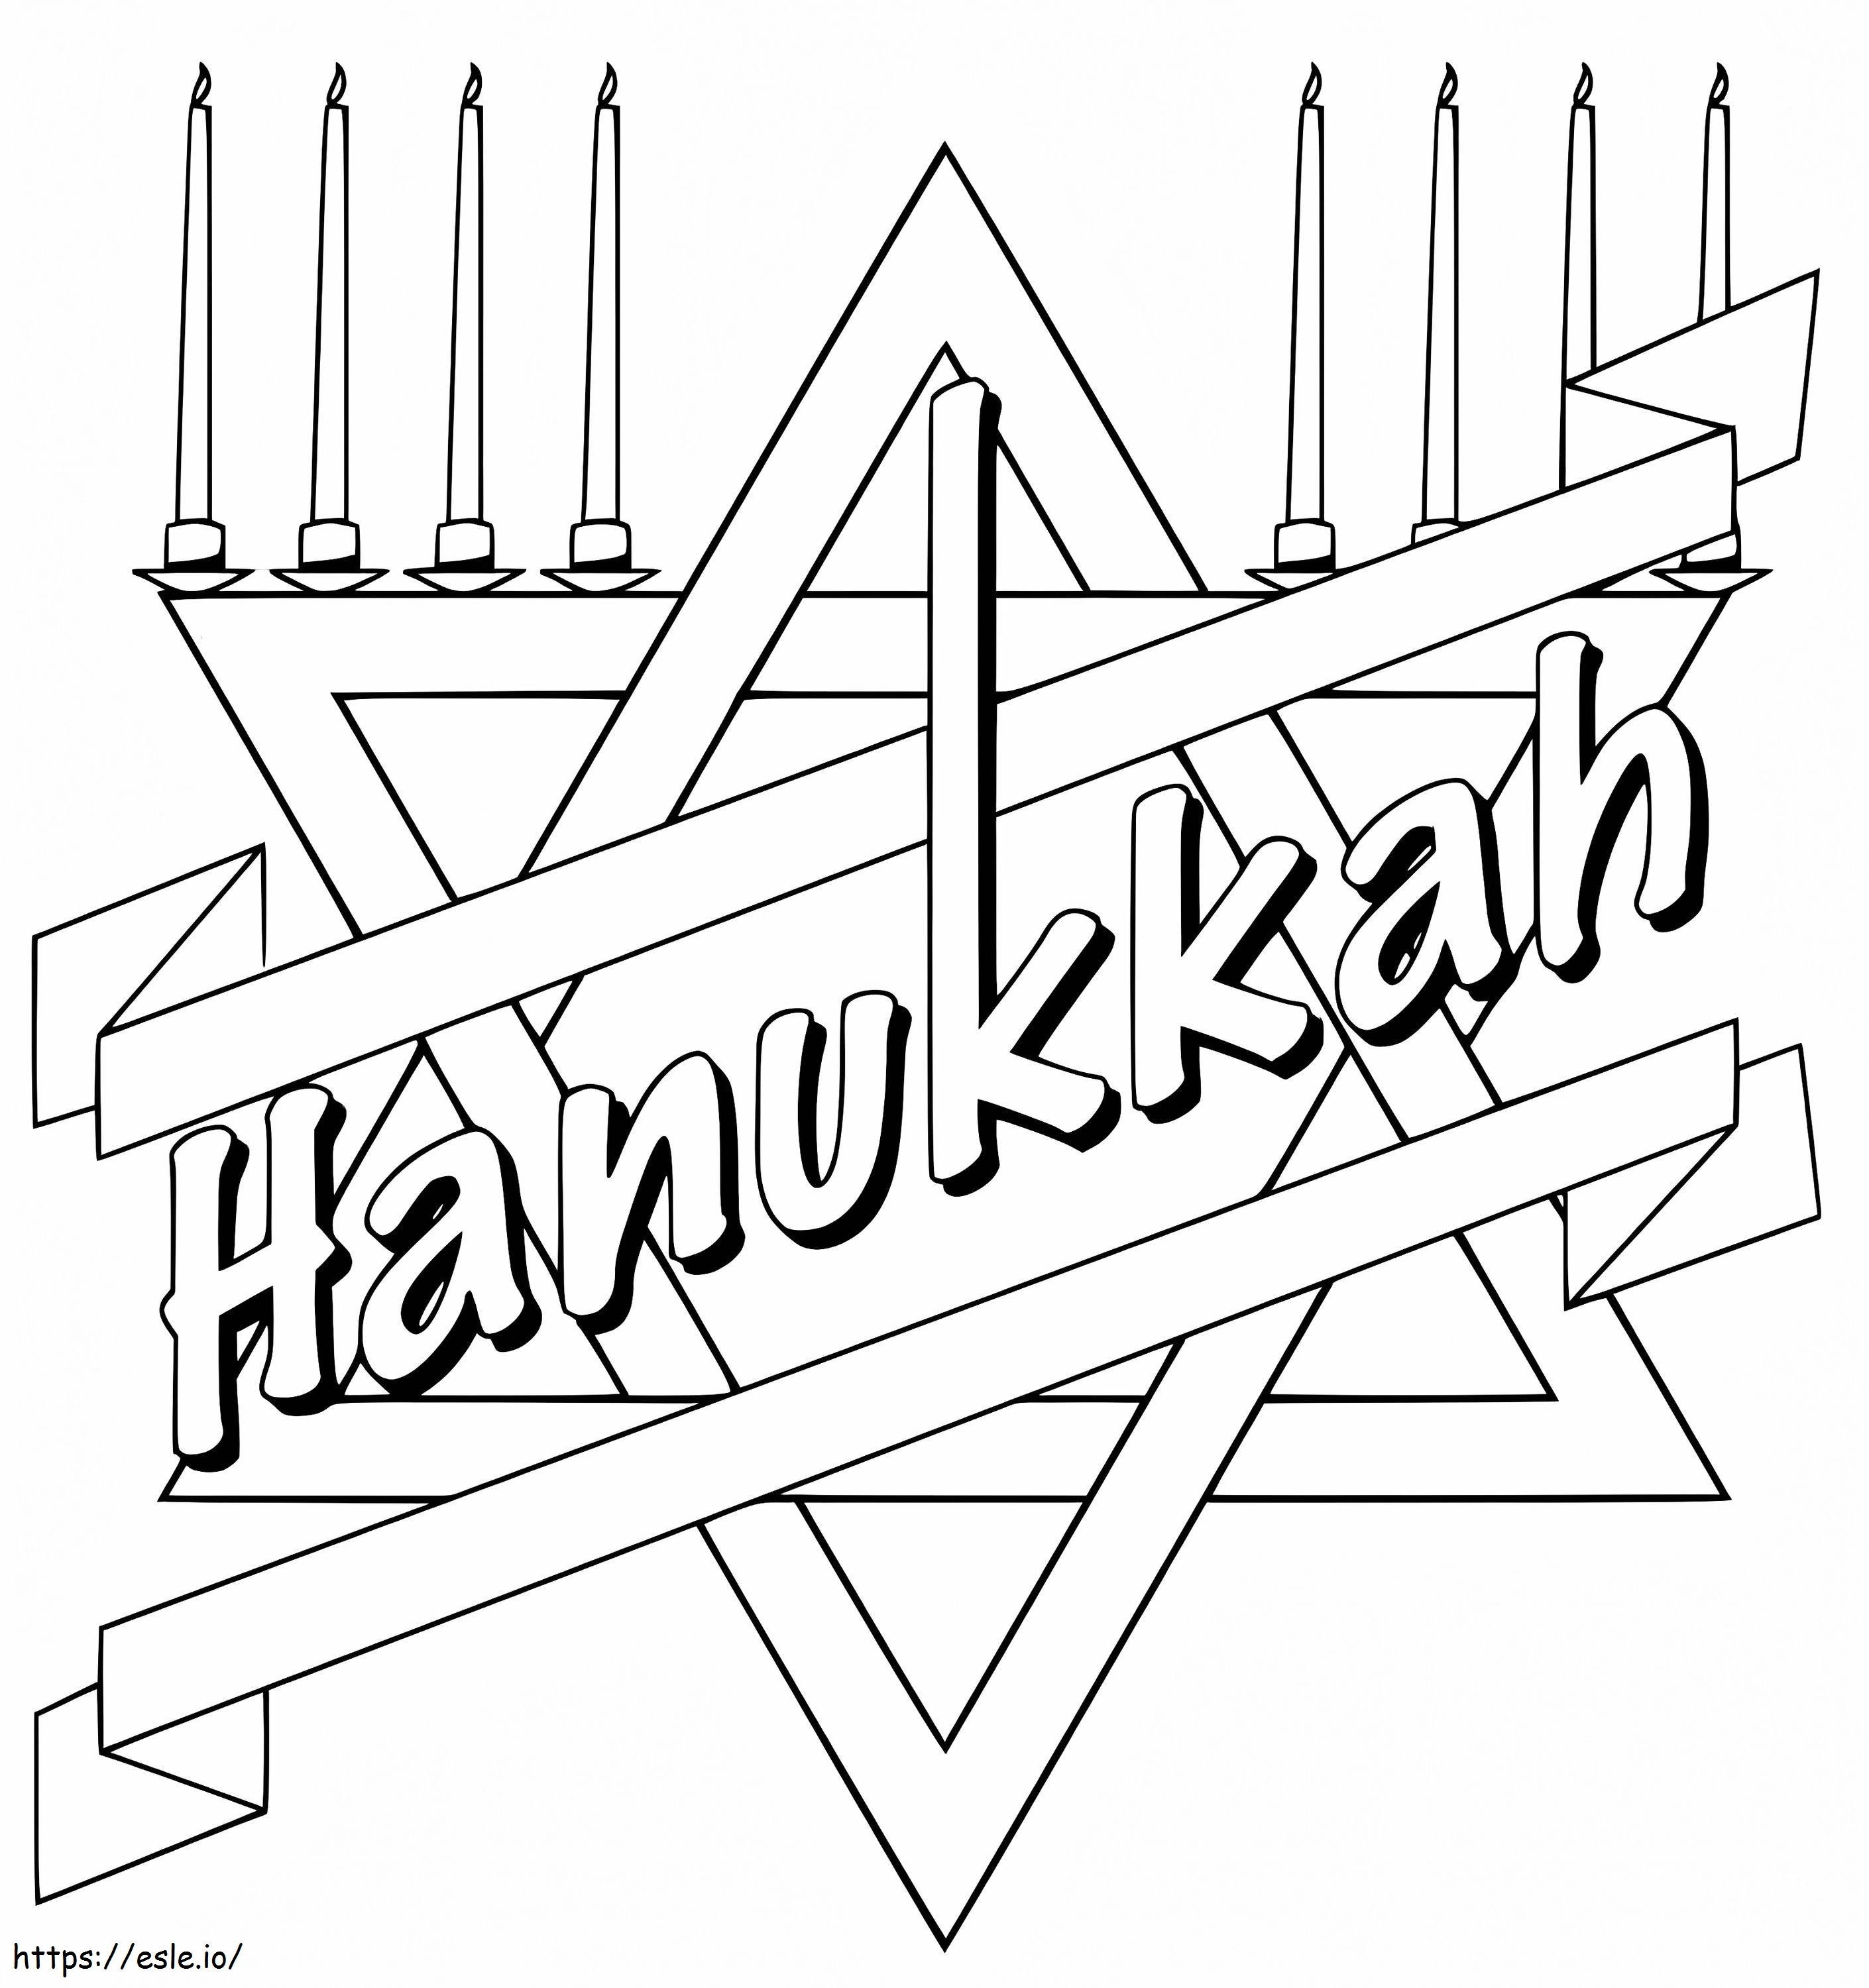 Free Hanukkah coloring page